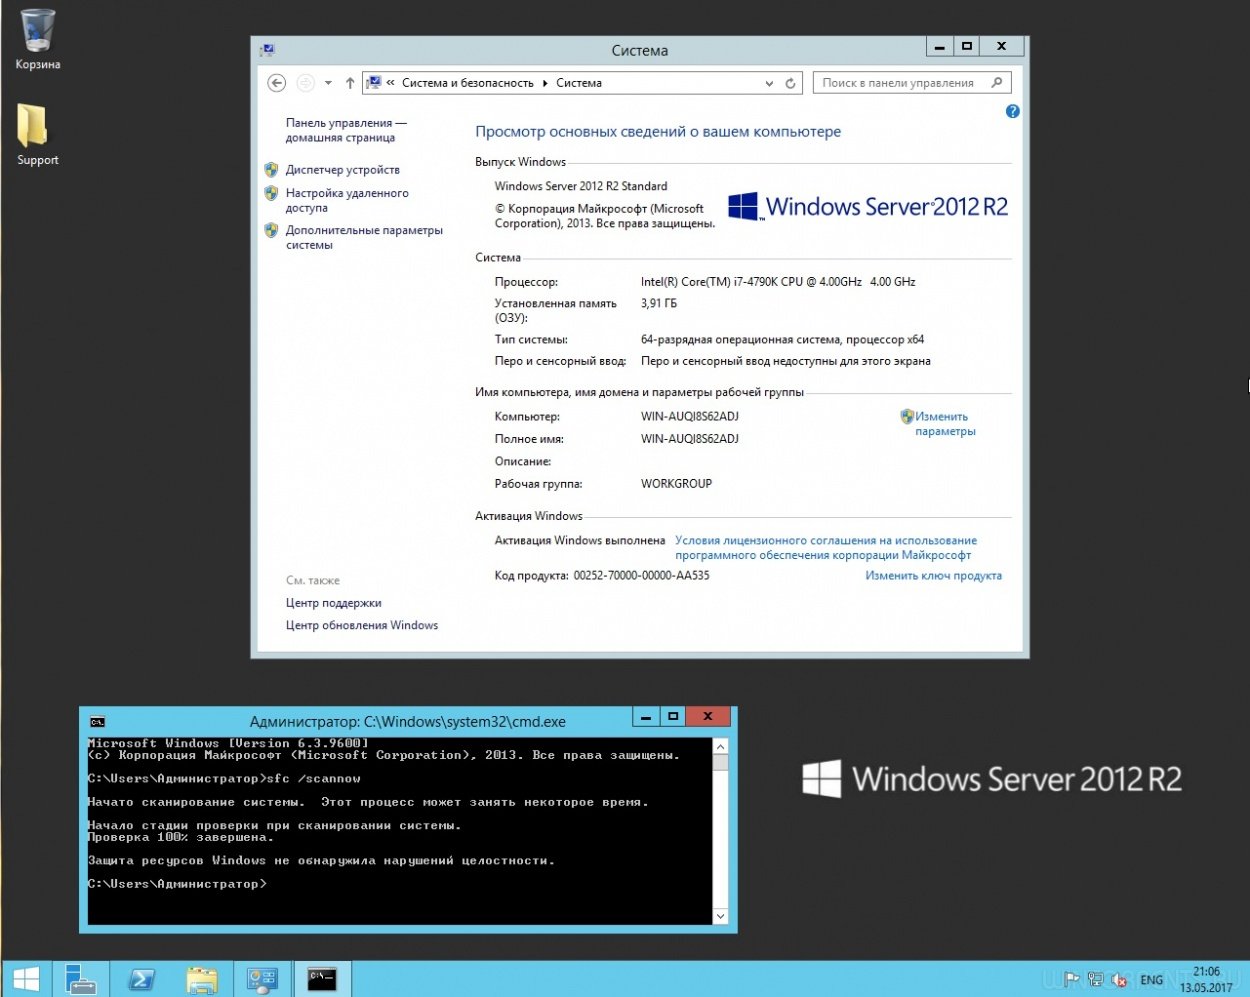 Windows Server 2012 R2 Keygen 2016 Free Full Version